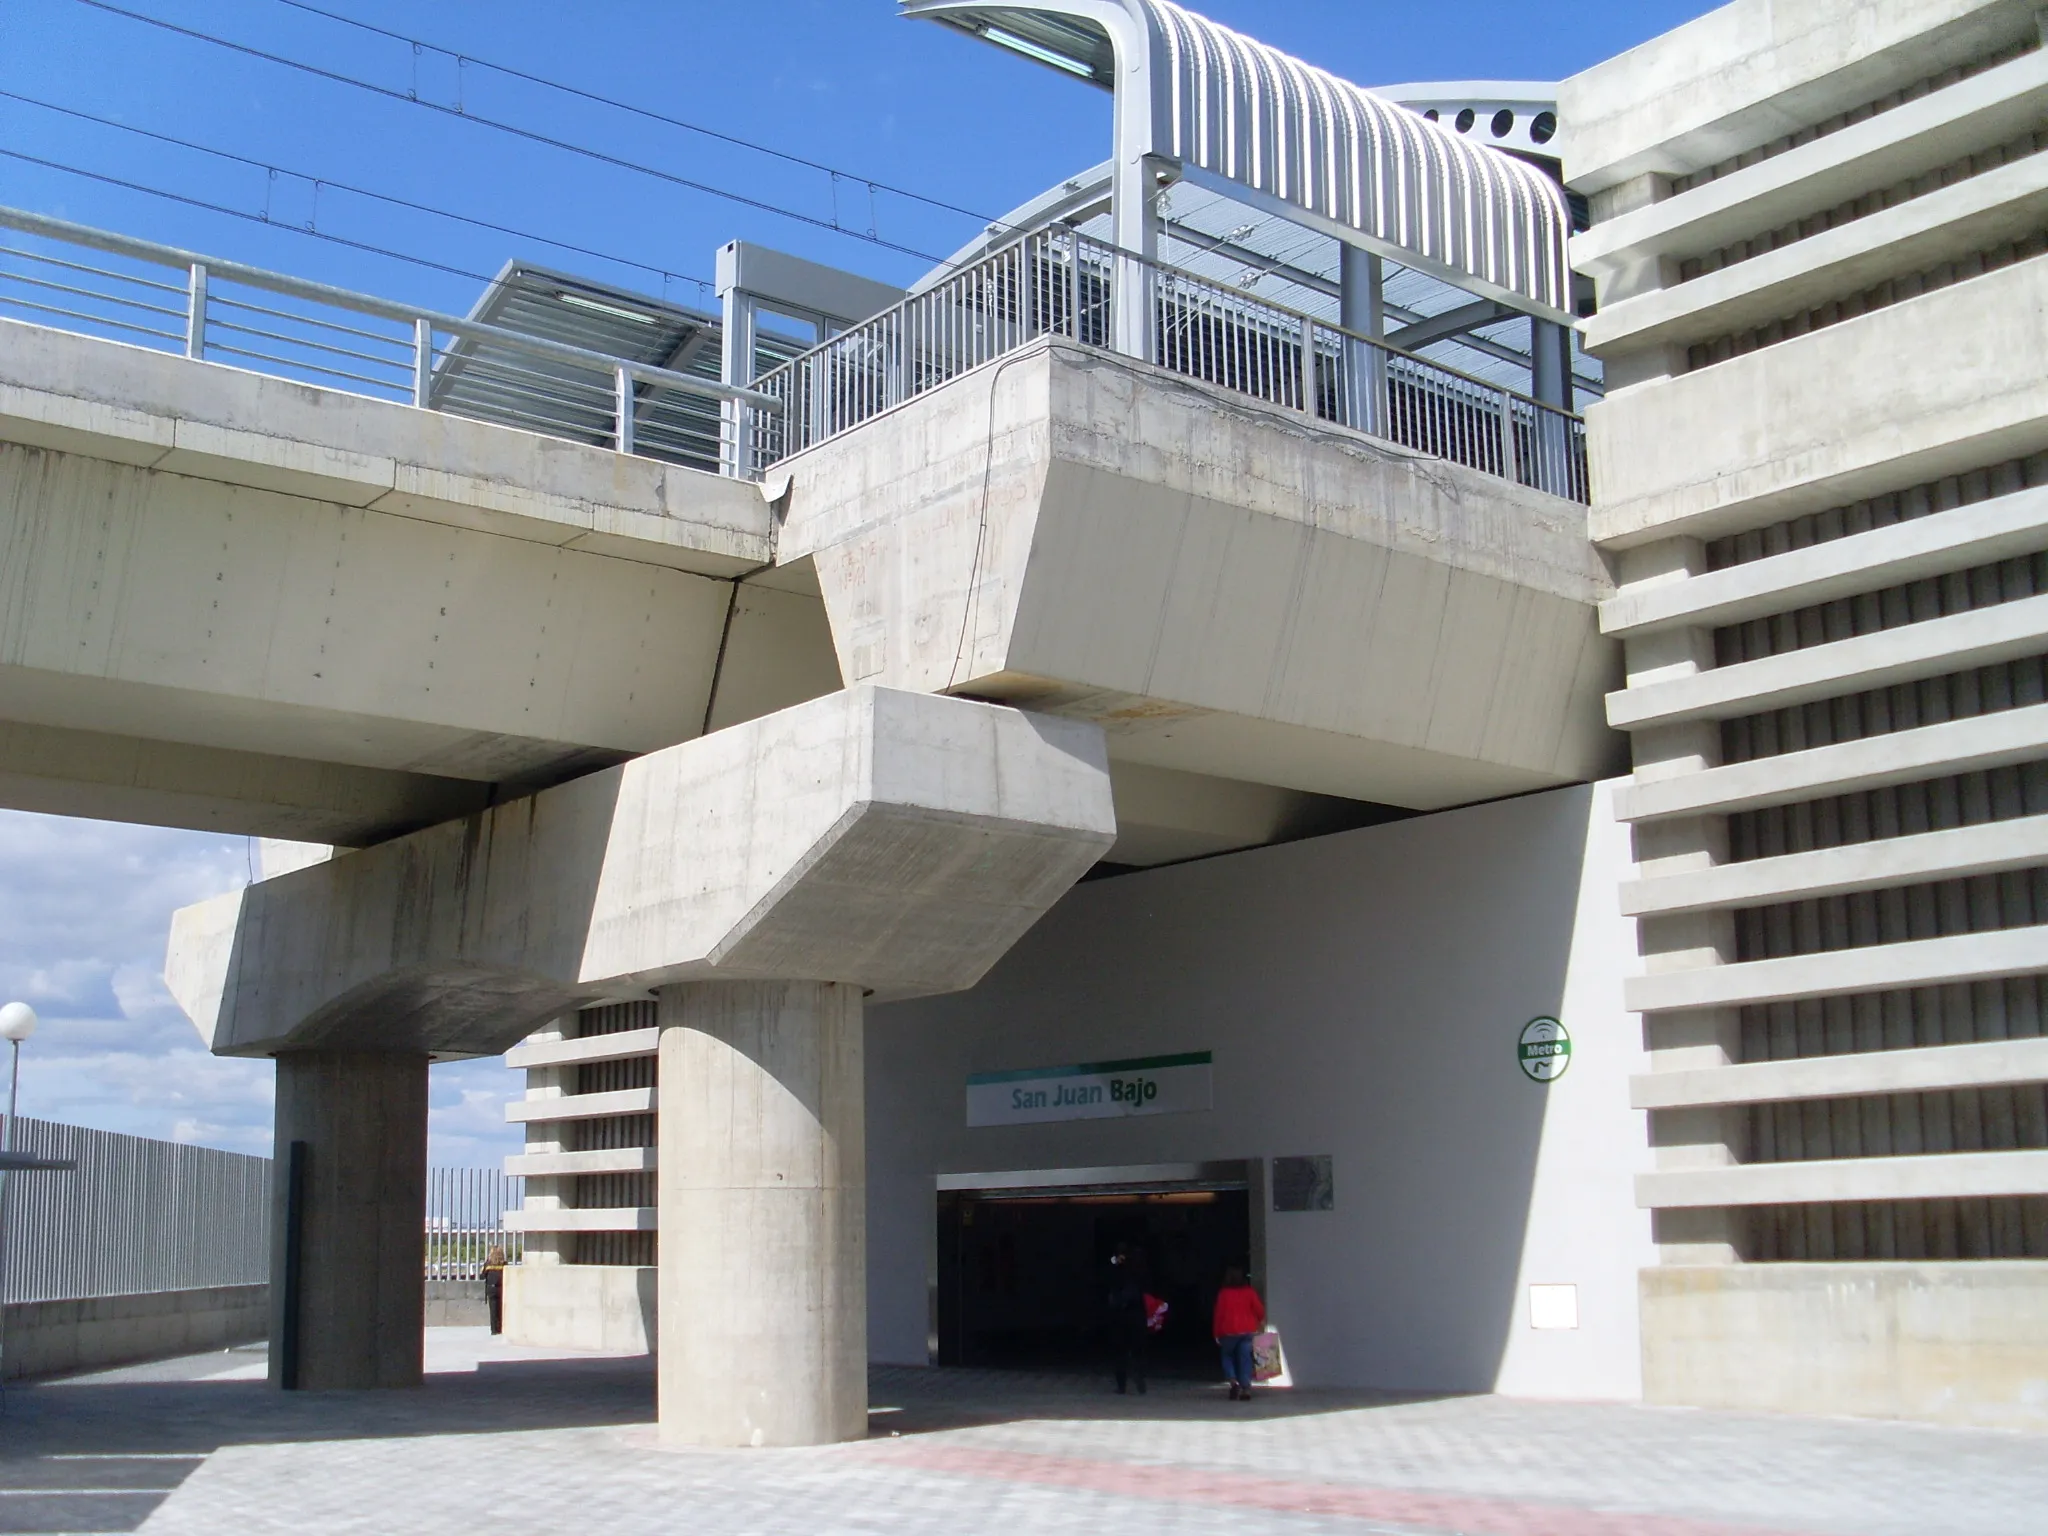 Photo showing: Seville subway, San Juan Bajo station. Entrance.